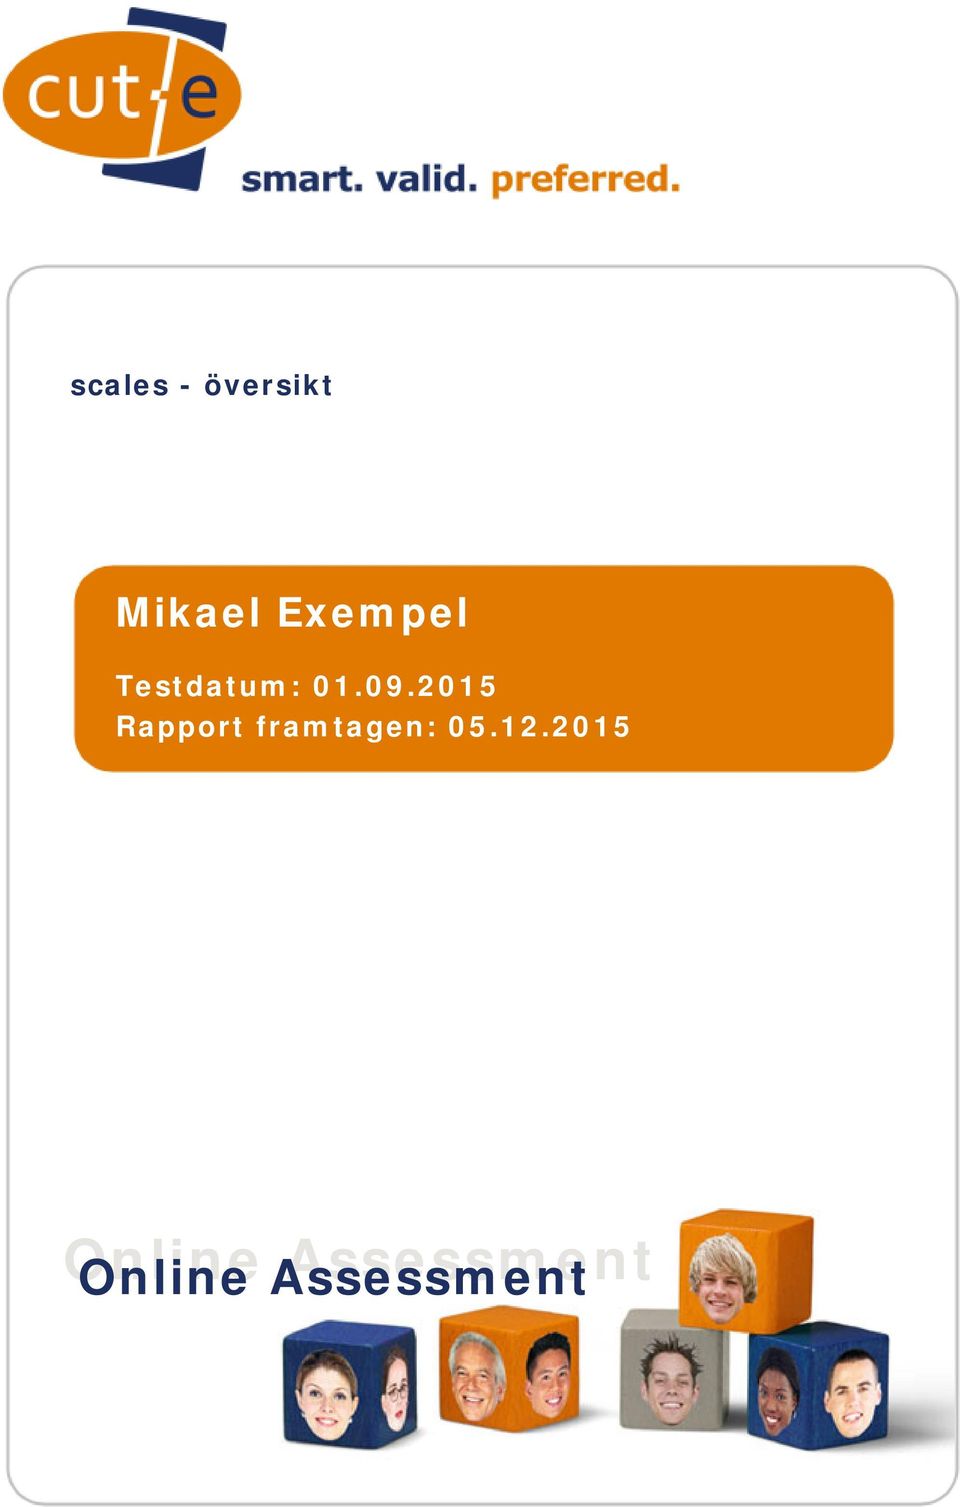 2015 Rapport framtagen: 05.12.